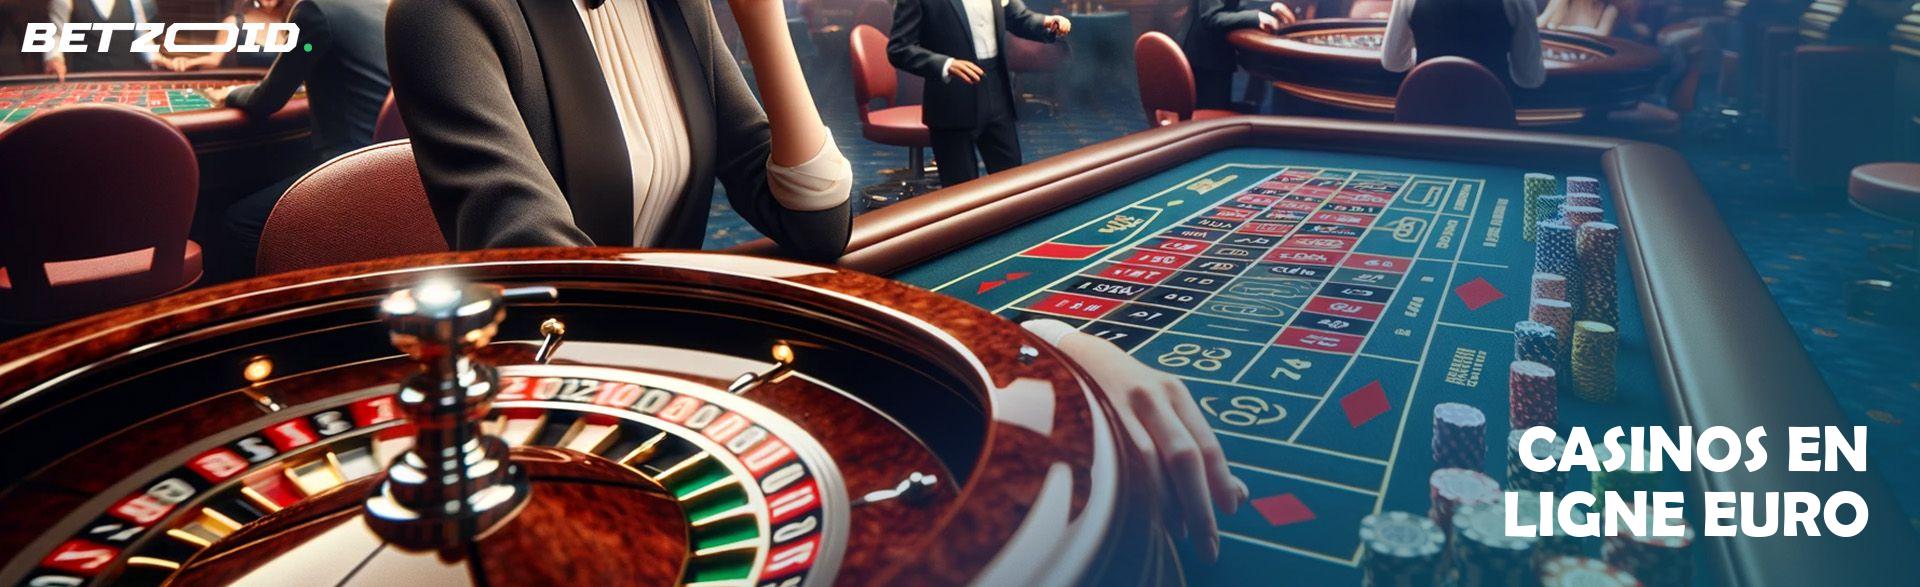 Casinos en Ligne Euro.